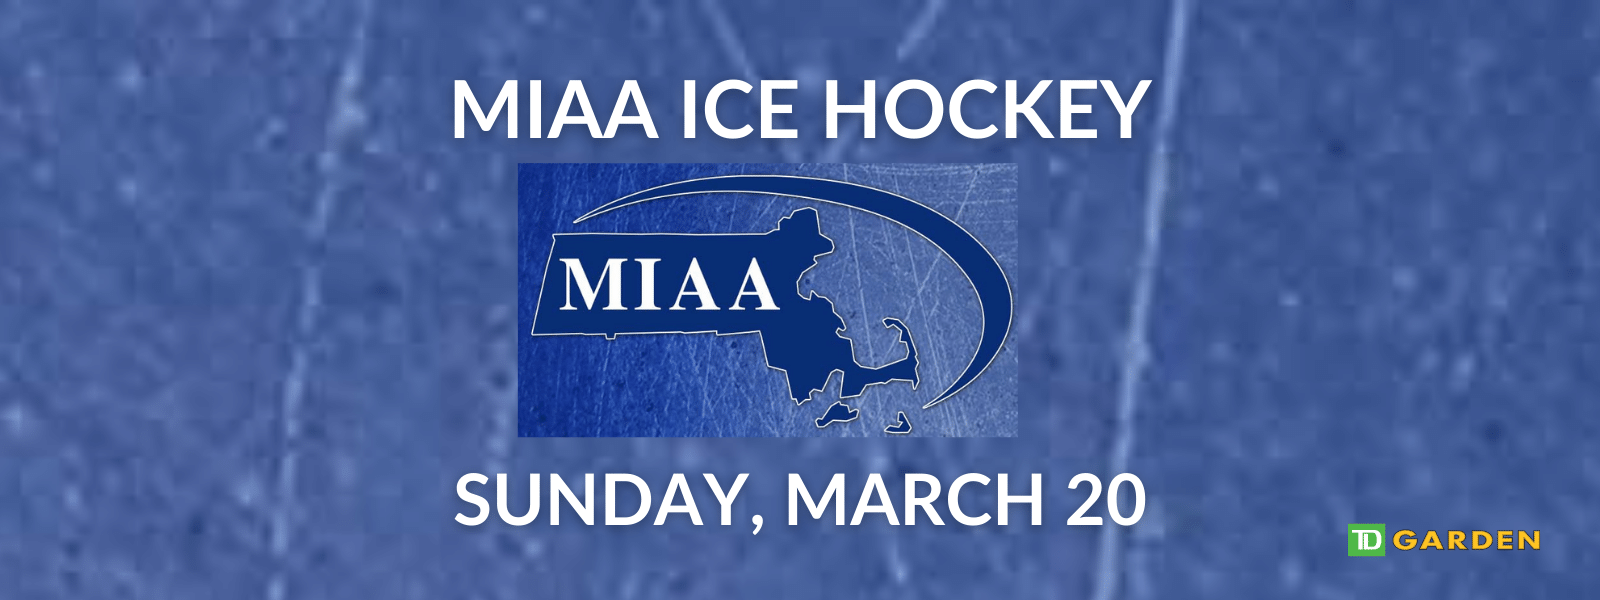 MIAA Hockey TD Garden